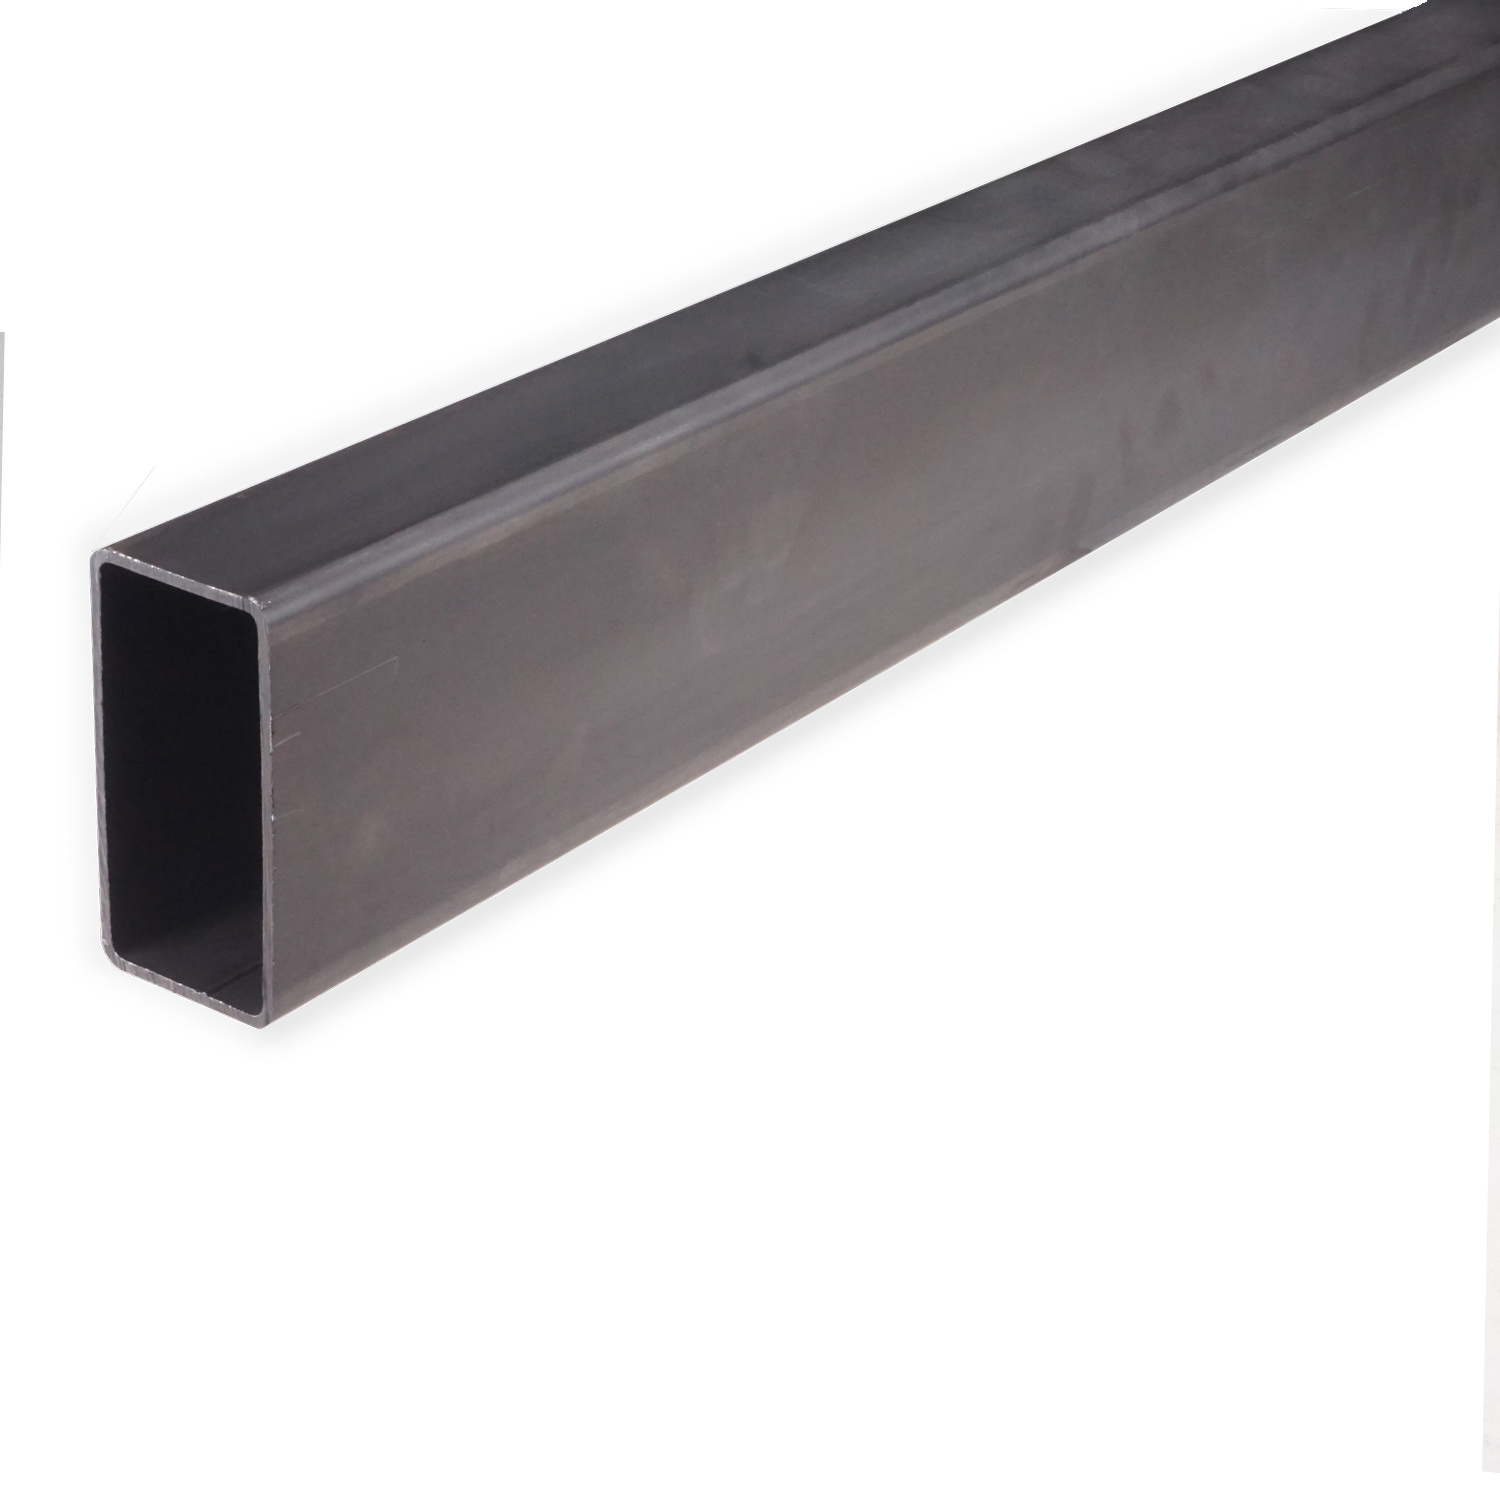  Koker staal - rechthoekige buis kokerprofiel KGV staal - S235JR - 80x50x2 MM